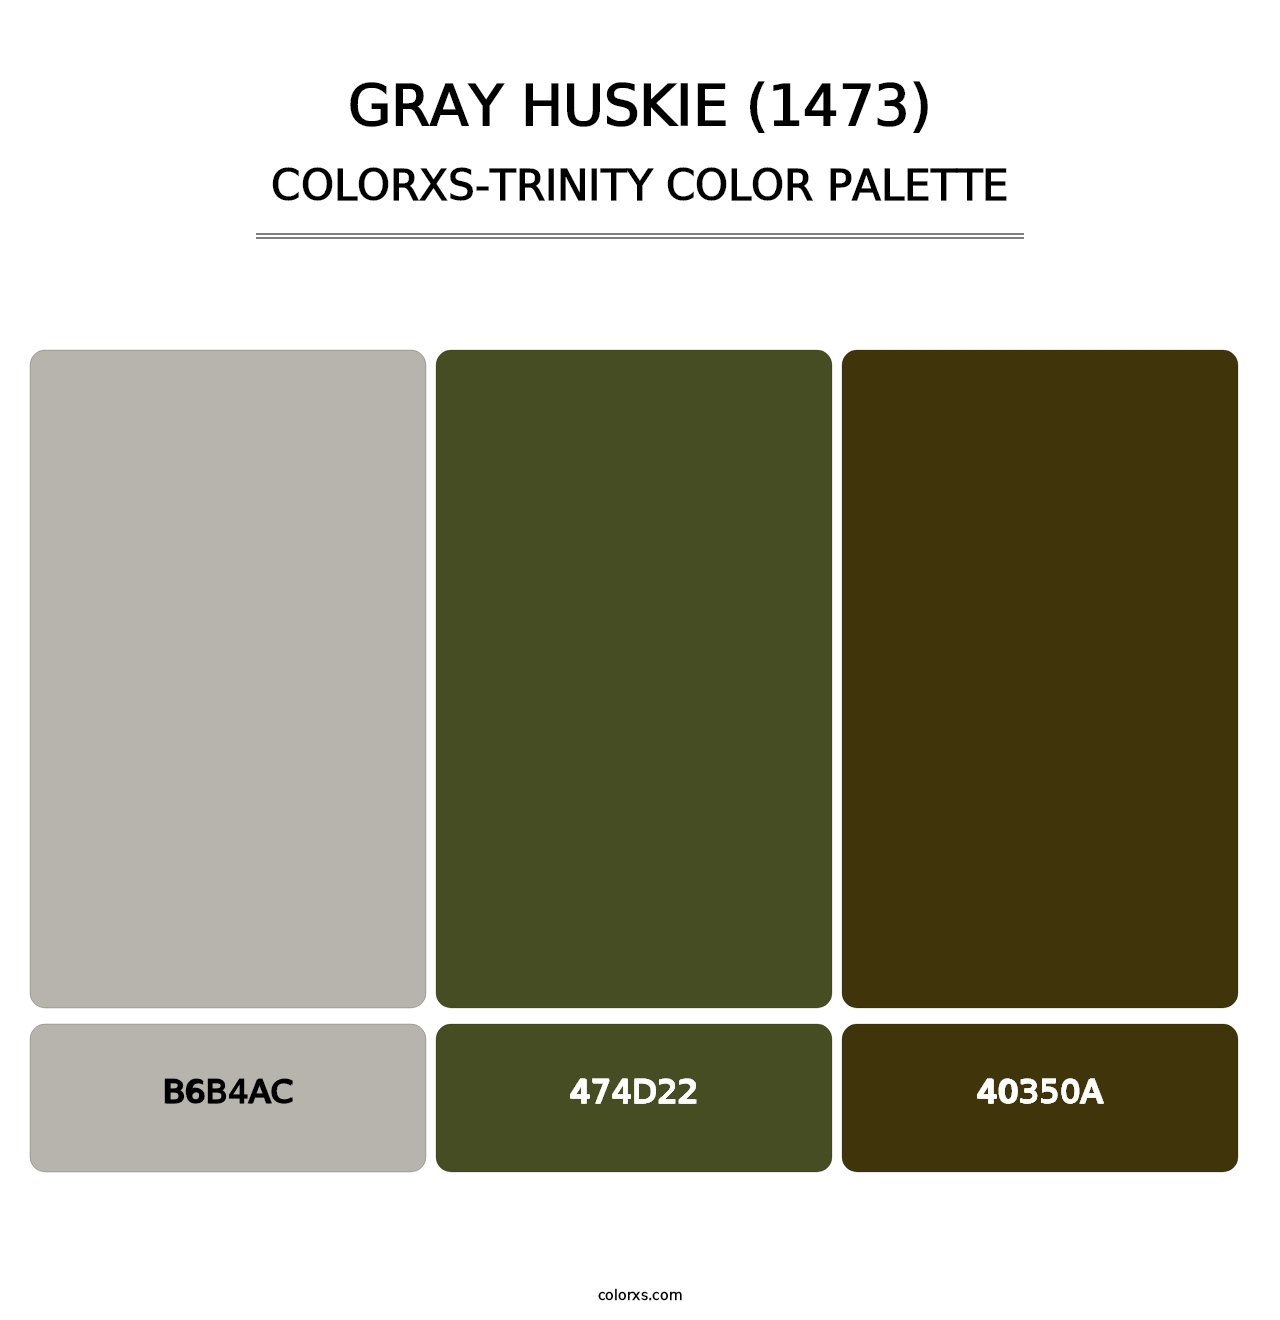 Gray Huskie (1473) - Colorxs Trinity Palette